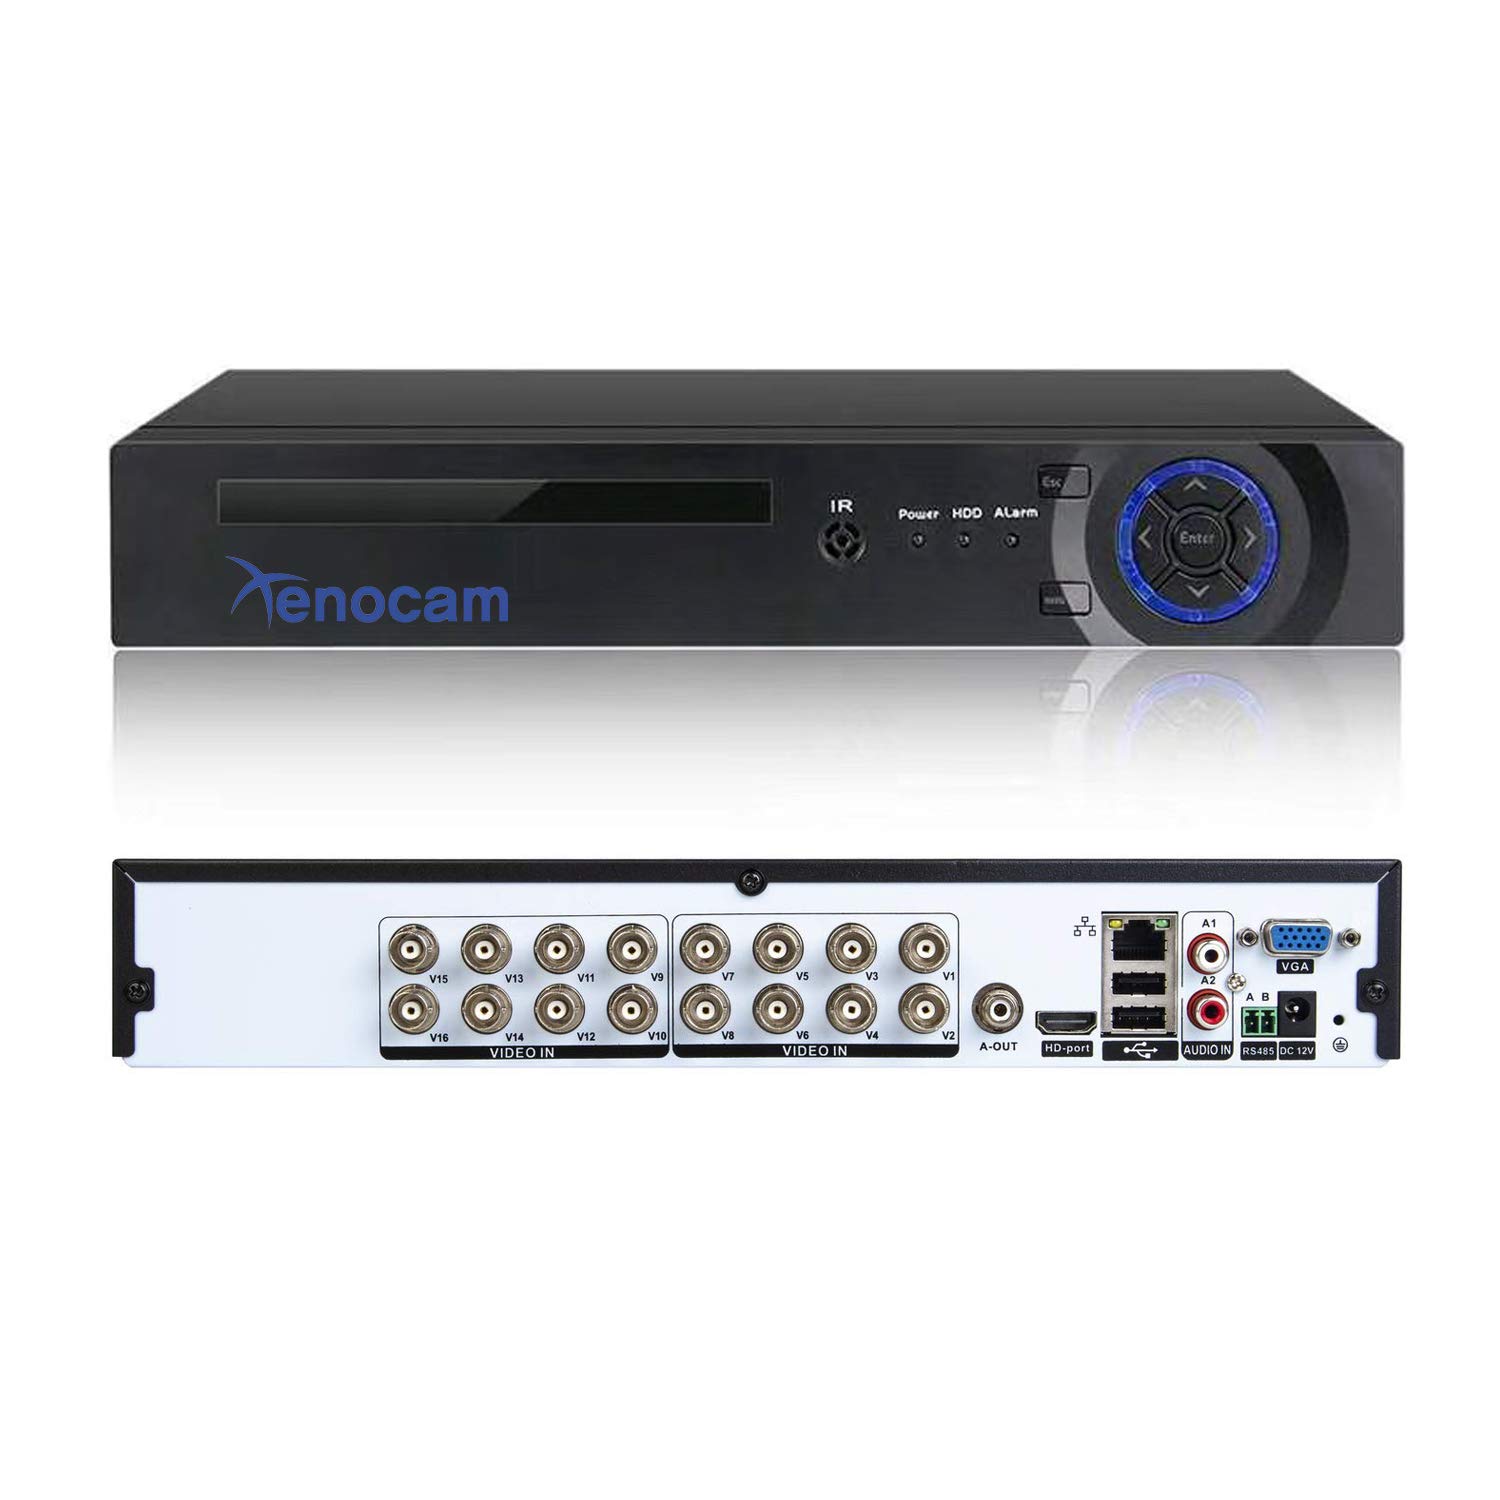 Xenocam 16CH 1080N Hybrid 5-in-1 AHD DVR (1080P NVR+1080N AHD+960H Analog+TVI+CVI) Standalone DVR CCTV Surveillance Security System Video Recorder ...